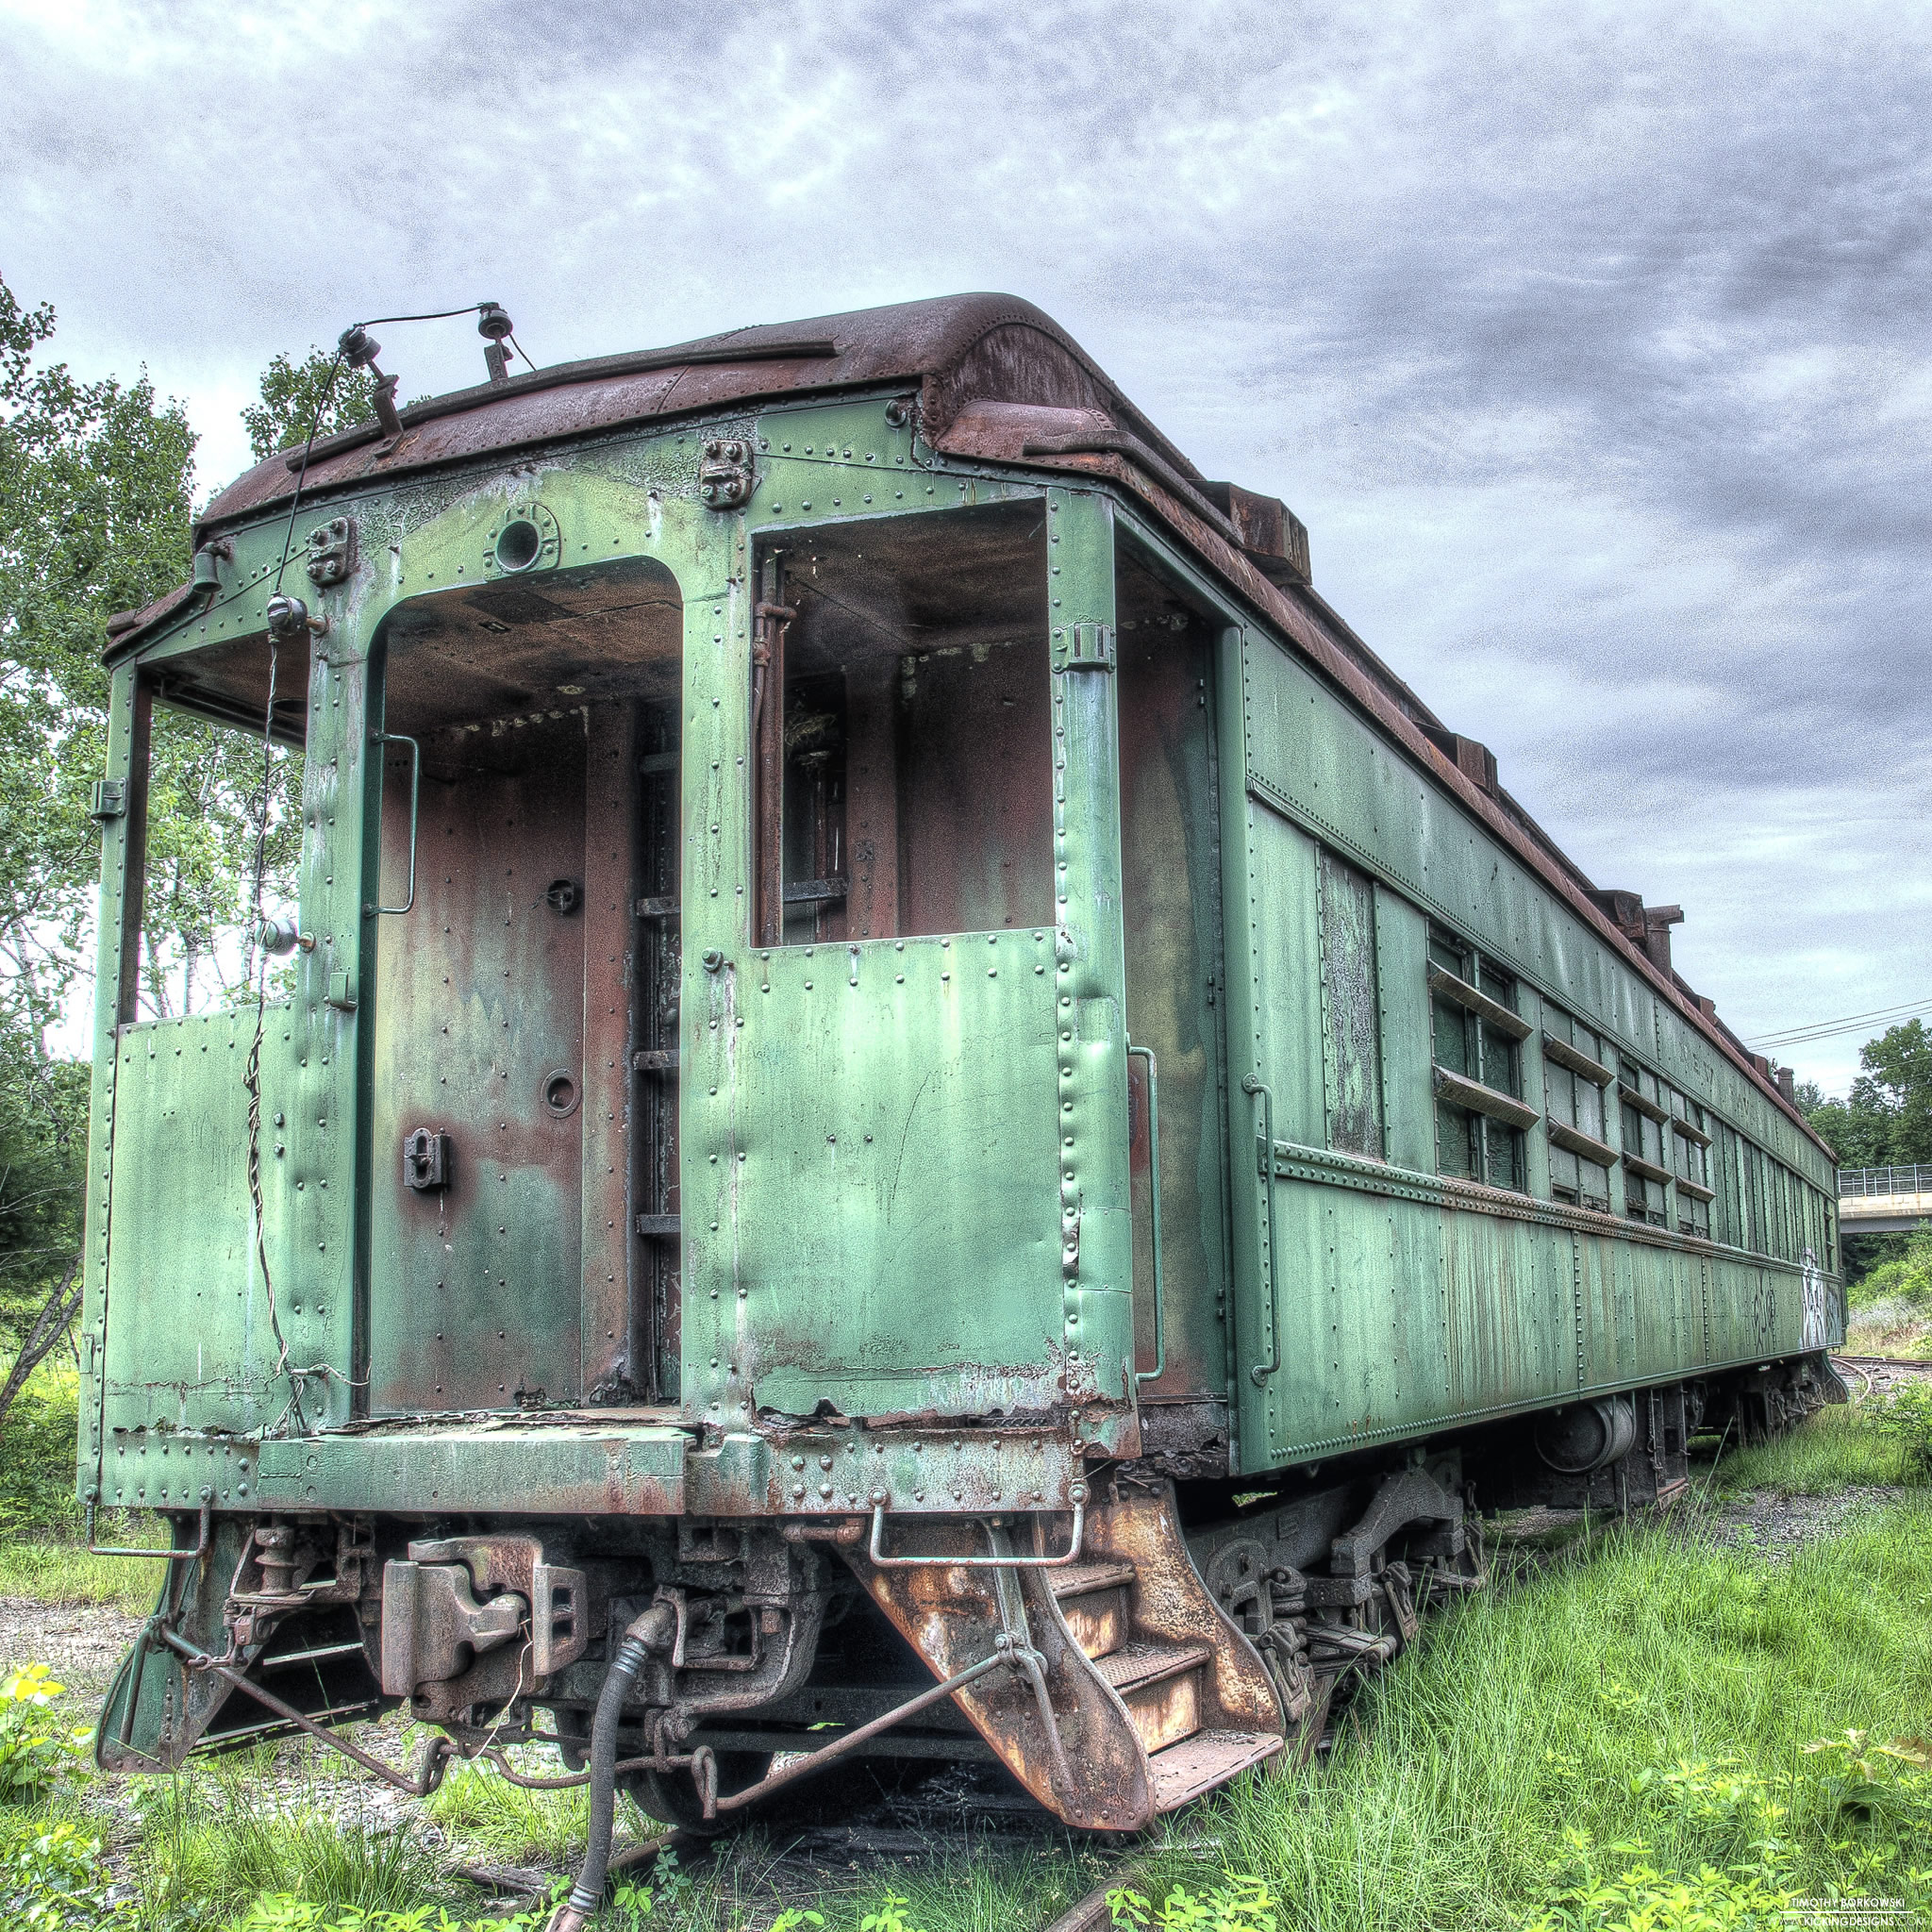 Abandoned Train Car 8-3-2014 Wallpaper Background | Kicking Designs